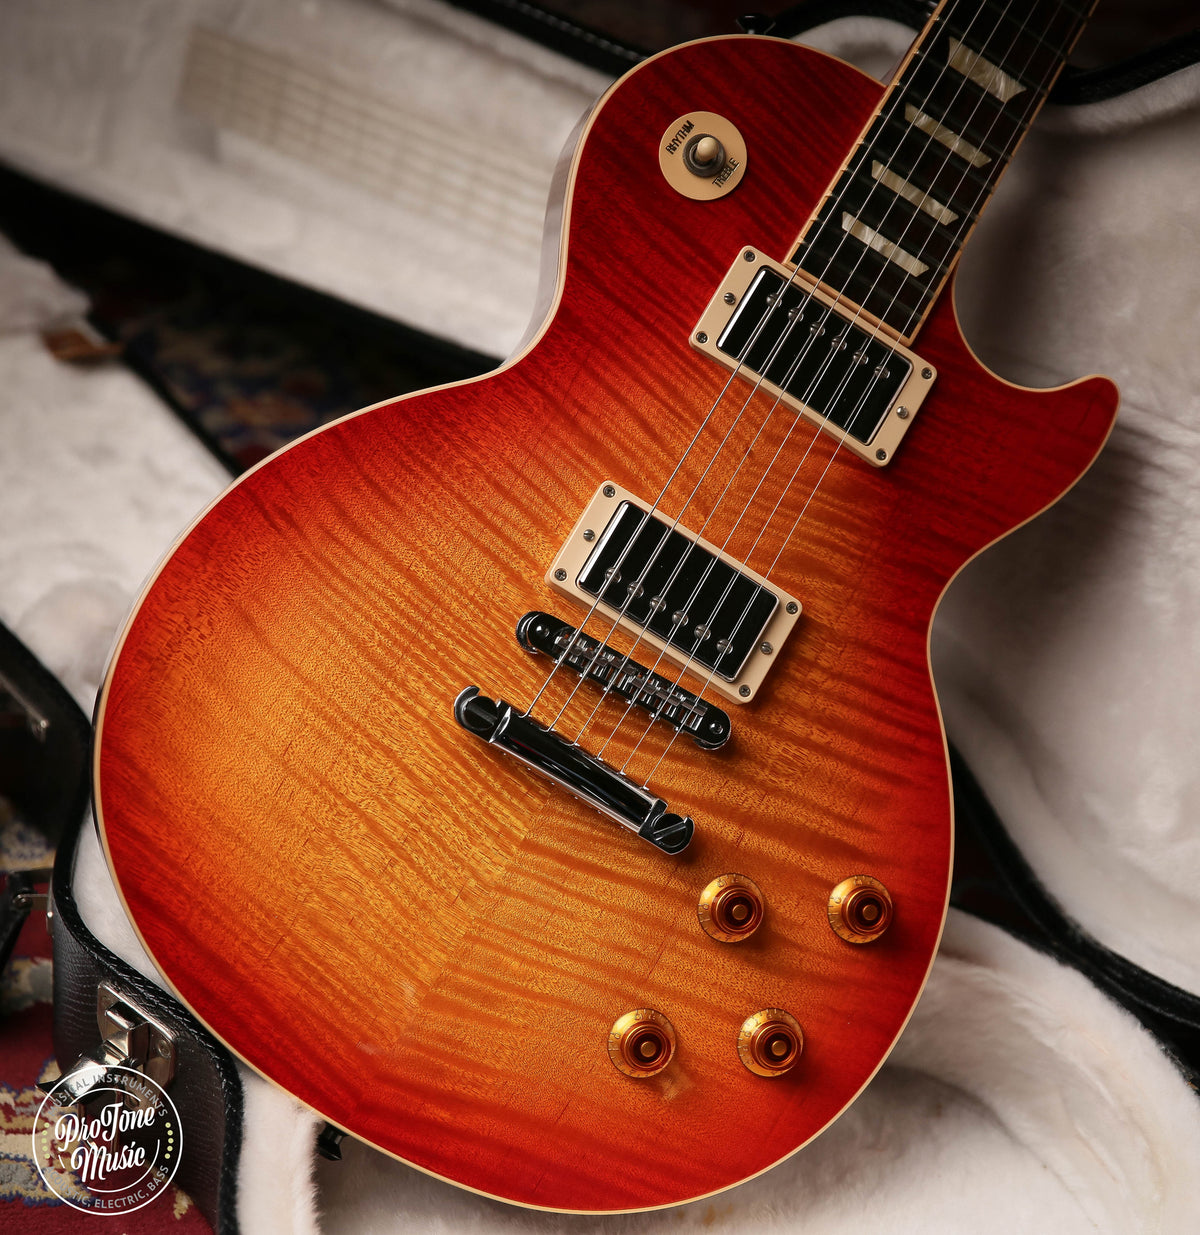 2013 Gibson Les Paul Standard Cherry Sunburst Flame Top - ProTone Music